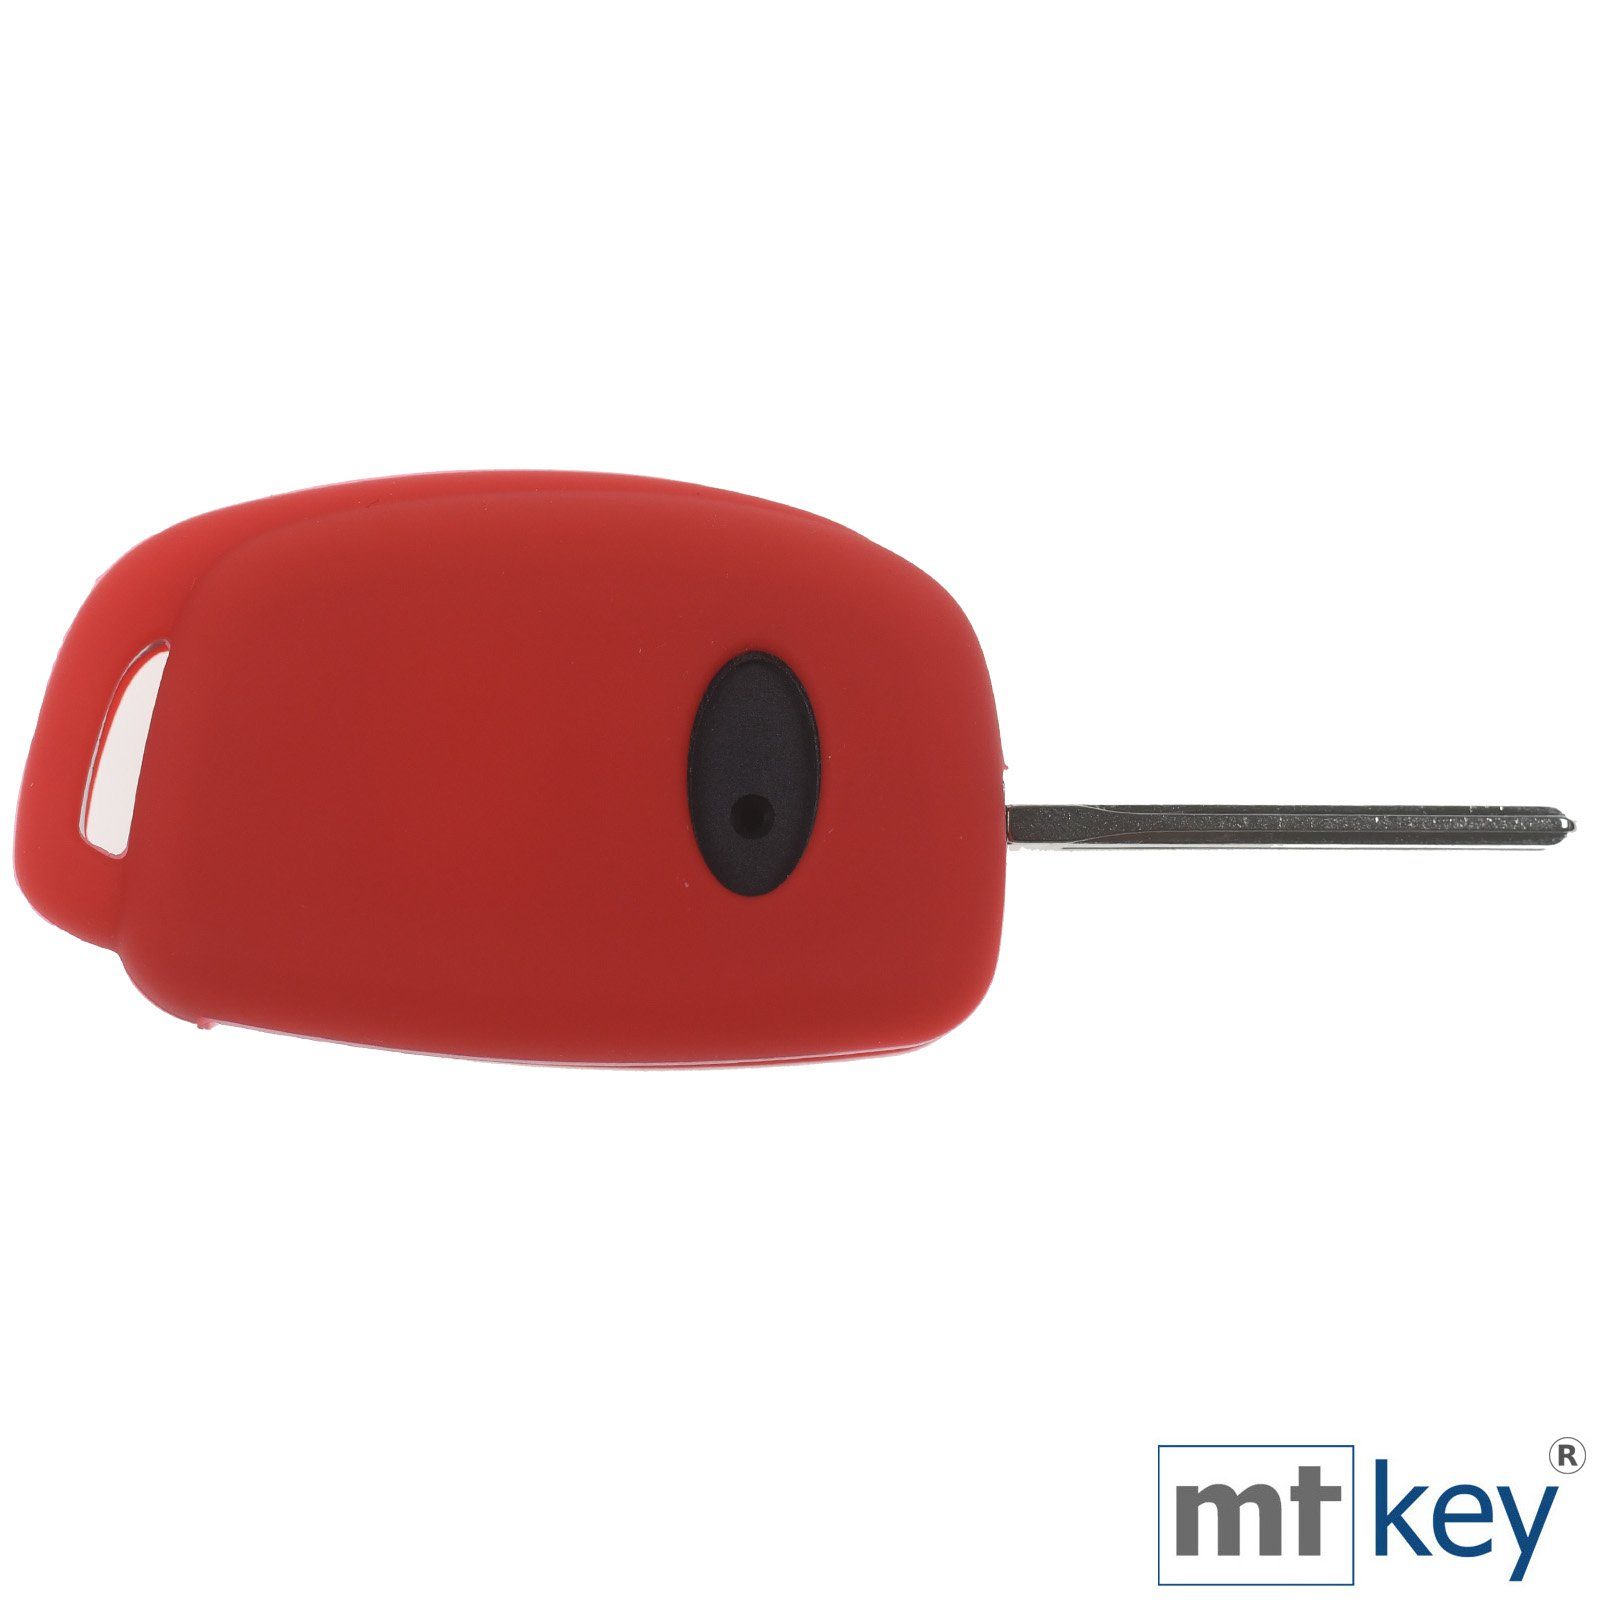 mt-key Schlüsseltasche Autoschlüssel Silikon für im Rot Accent ix35 Design Wabe Schutzhülle i20 ix25 Knopf i10 Tucson Schlüsselband, 3 Hyundai i40 mit Klappschlüssel